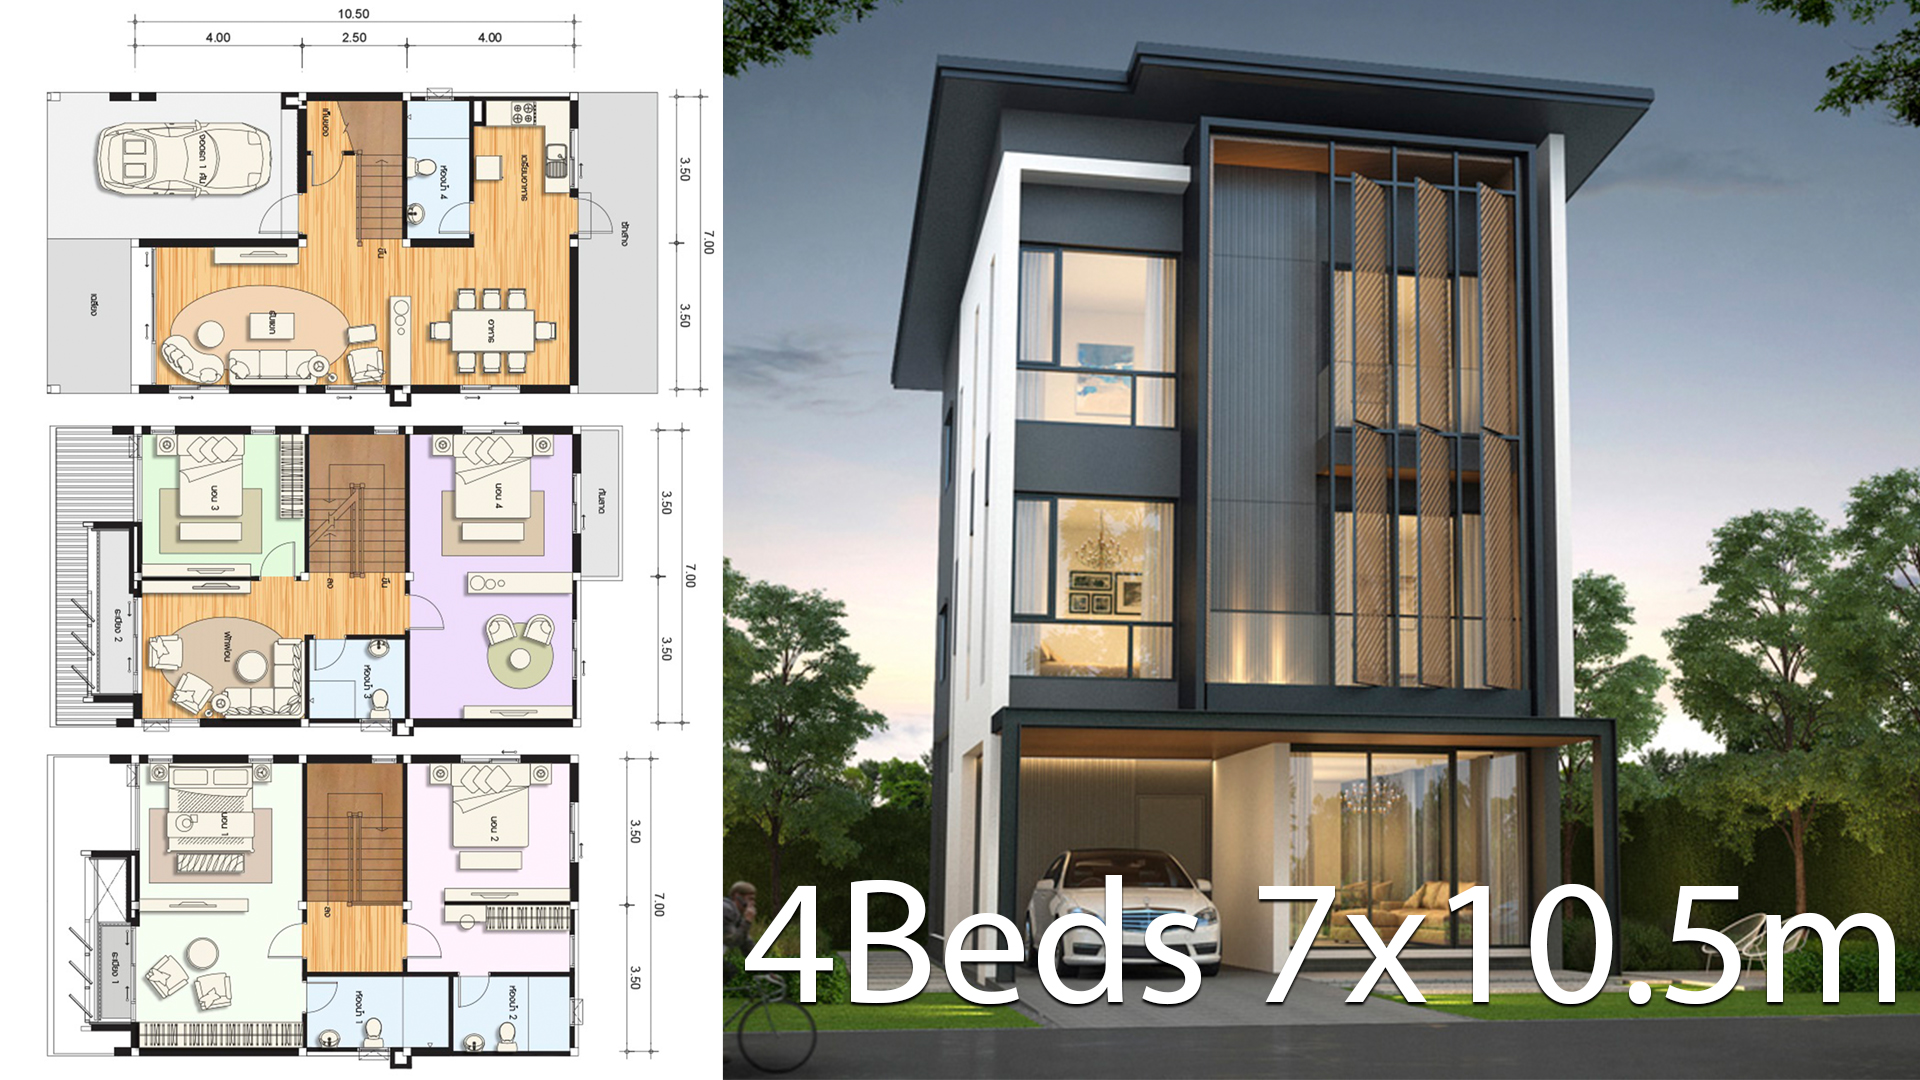 House design plan 7x10.5m with 4 bedrooms Pdf floor plan